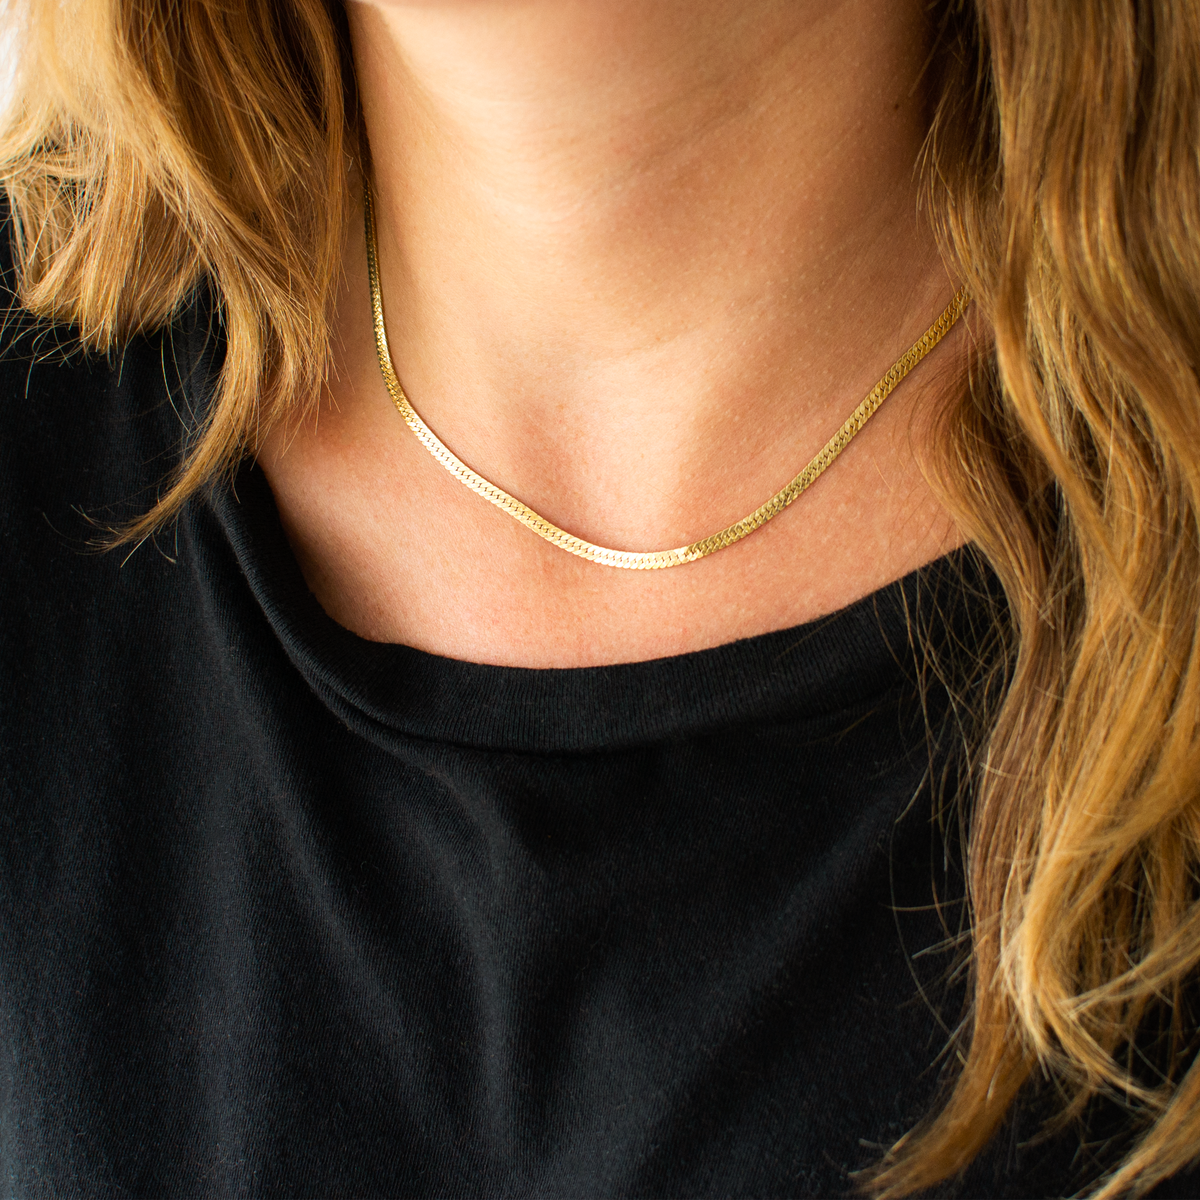 Thin Herringbone Necklace in Gold Super Short (36cm)